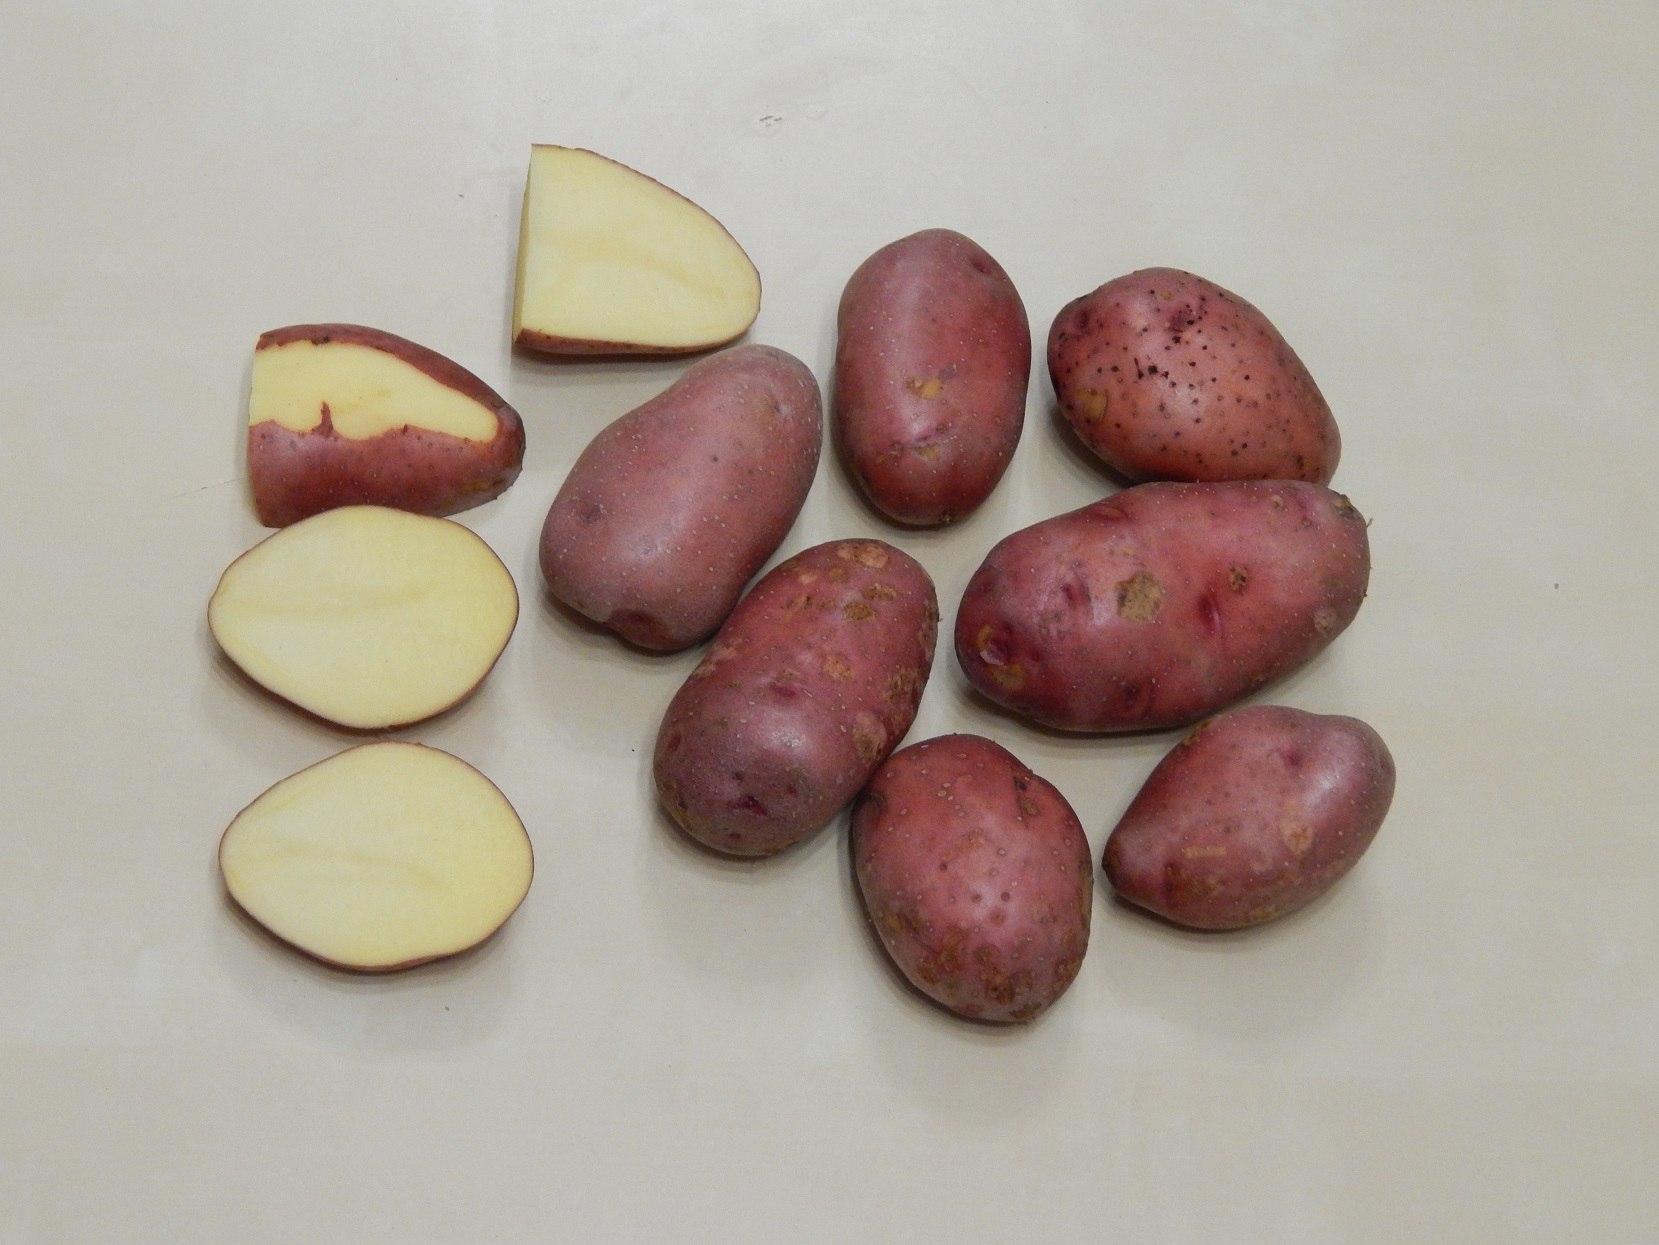 Картофель беллароза описание сорта характеристика